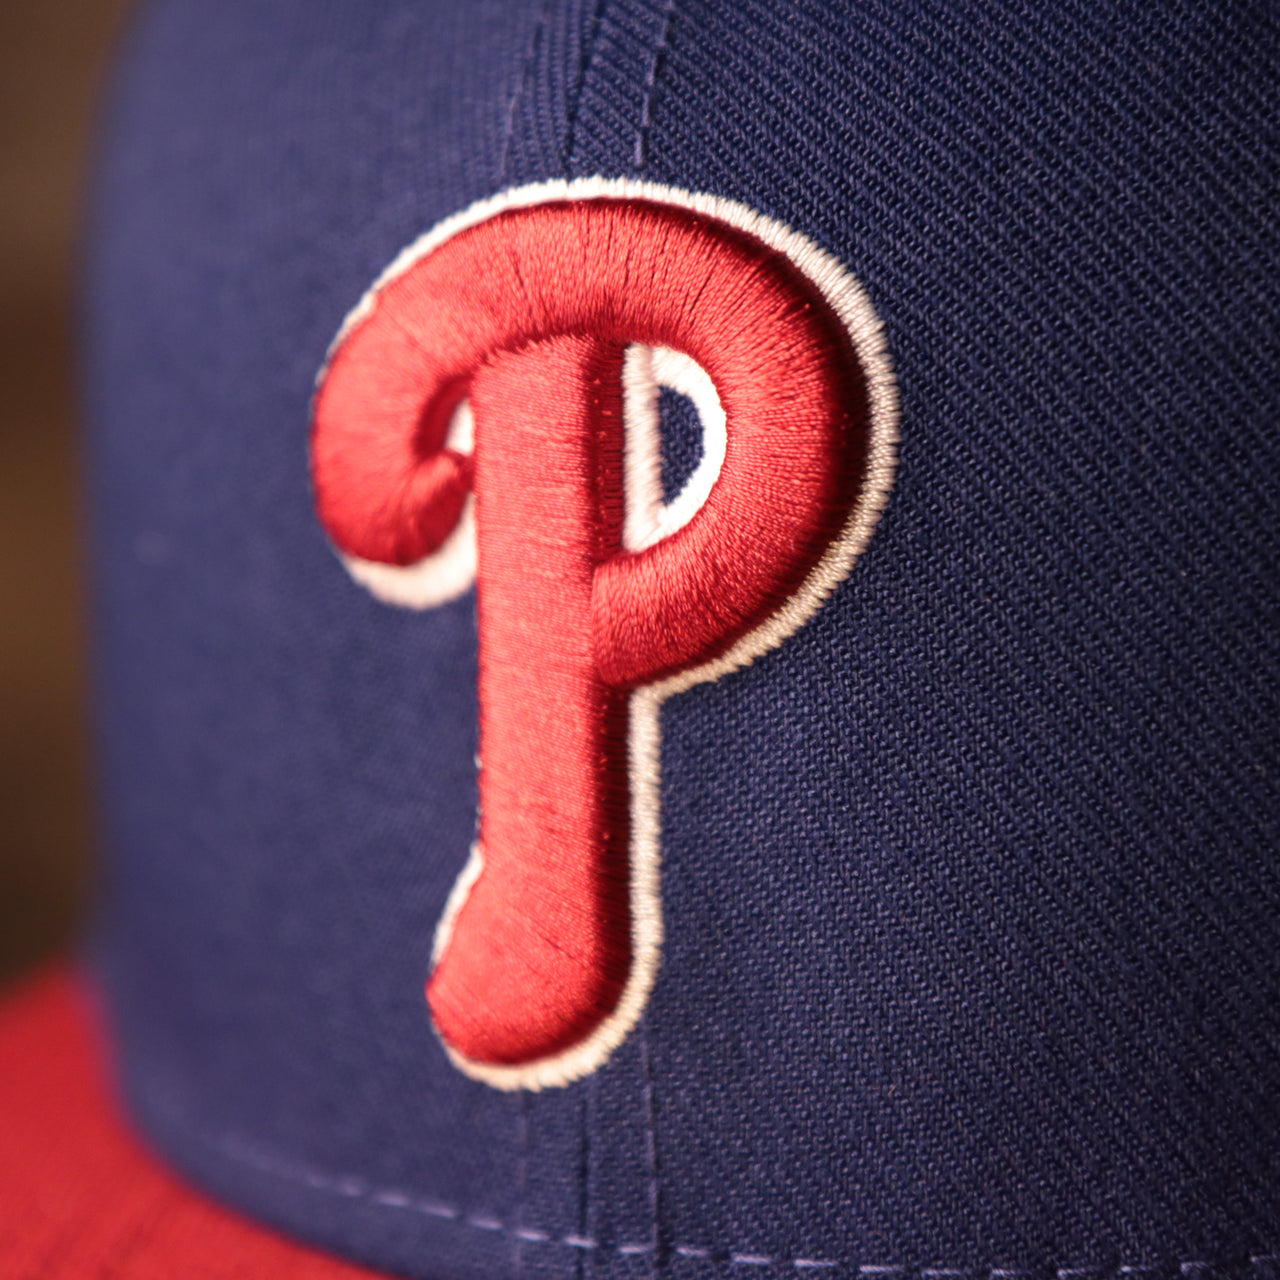 Phillies Black Bottom Youth Fitted Cap | Philadelphia Phillies Red/Blue Game Worn Black Under Brim Children's Fitted Hat